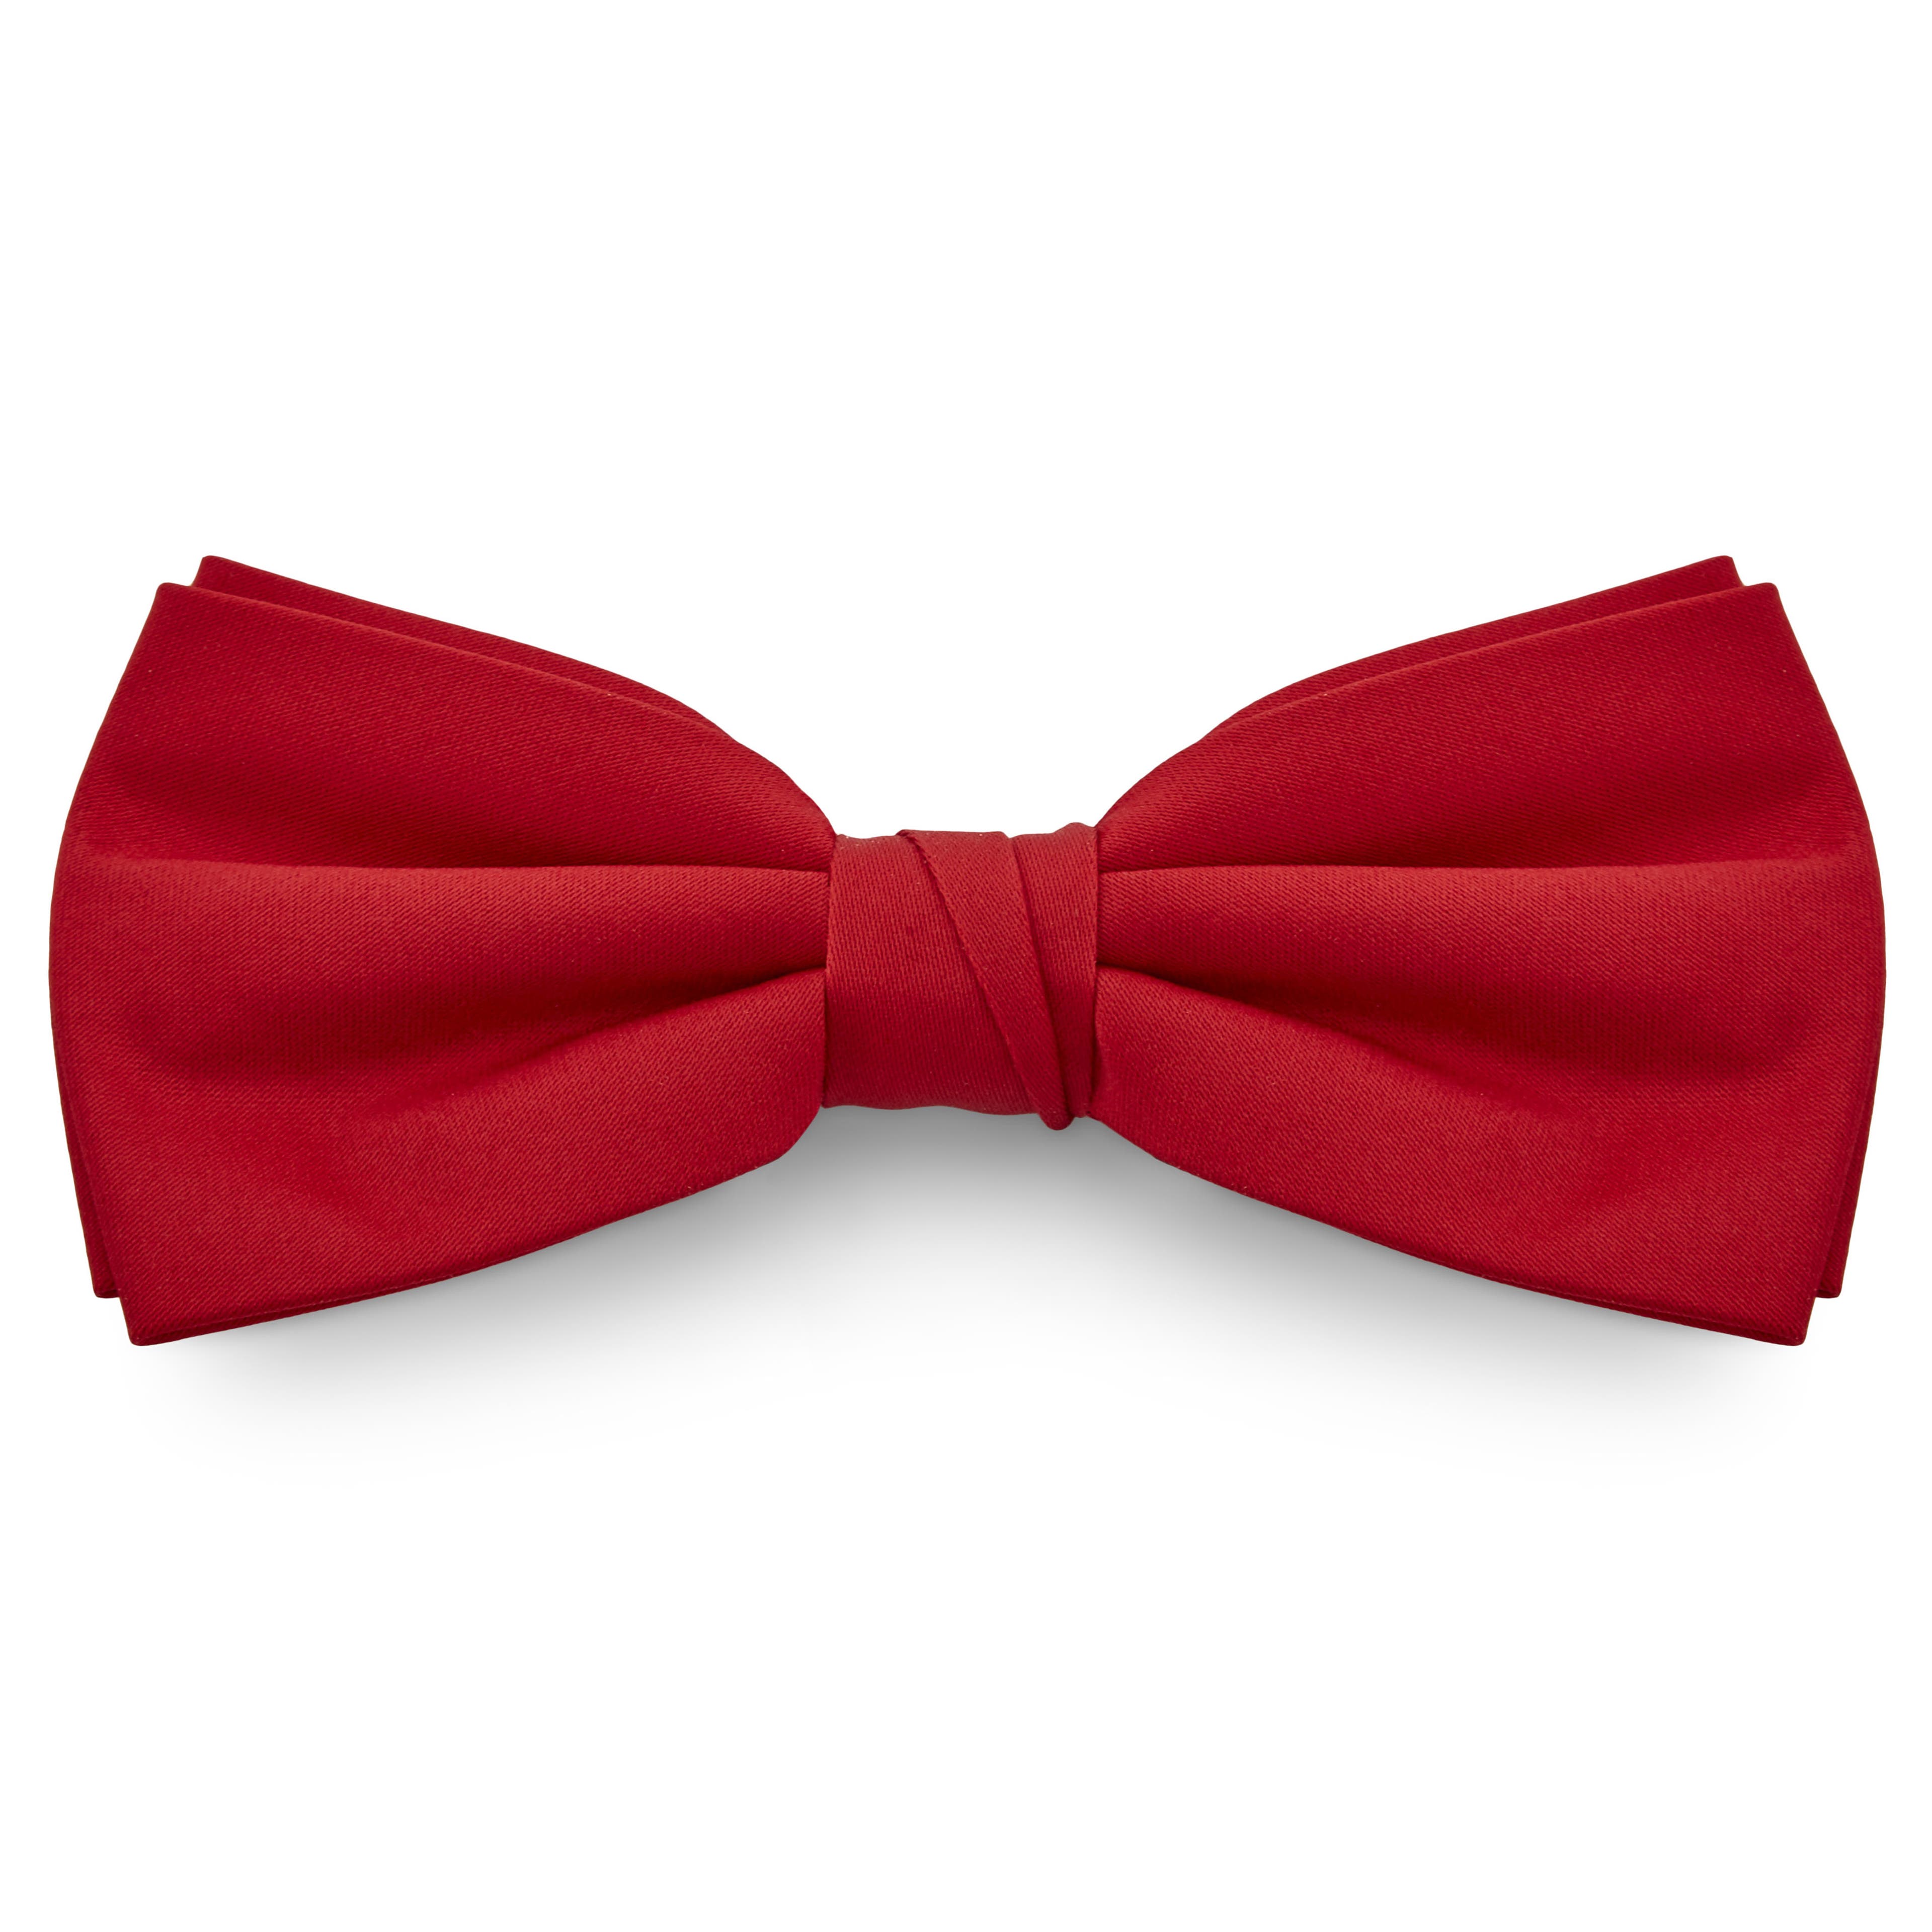 Tie Clip PNG - Bow Tie, Black Tie, Suit And Tie, Red Bow Tie